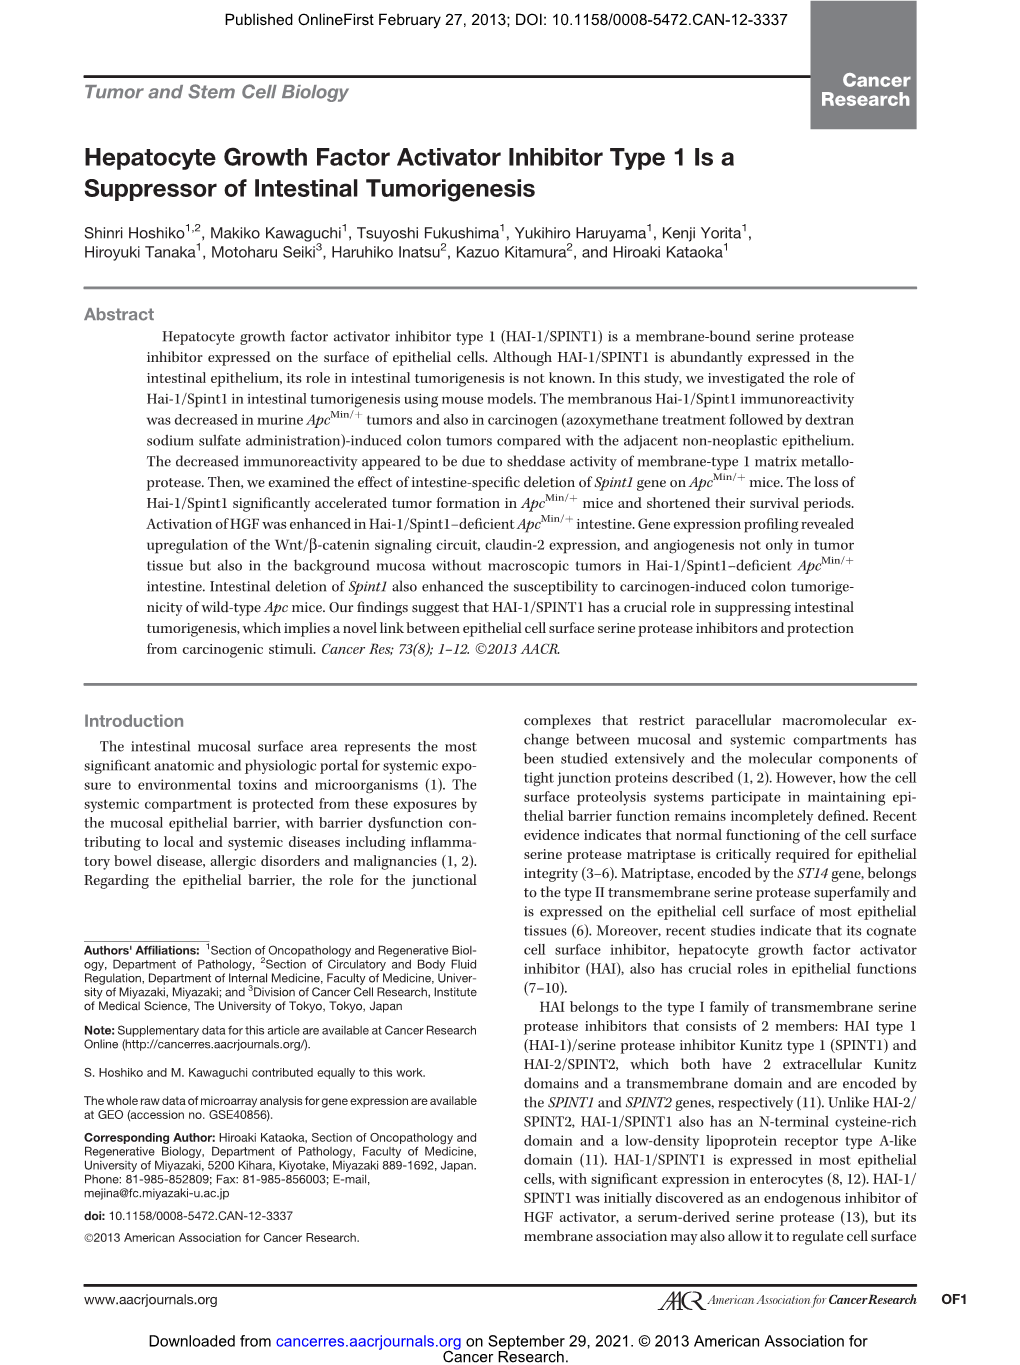 Hepatocyte Growth Factor Activator Inhibitor Type 1 Is a Suppressor of Intestinal Tumorigenesis